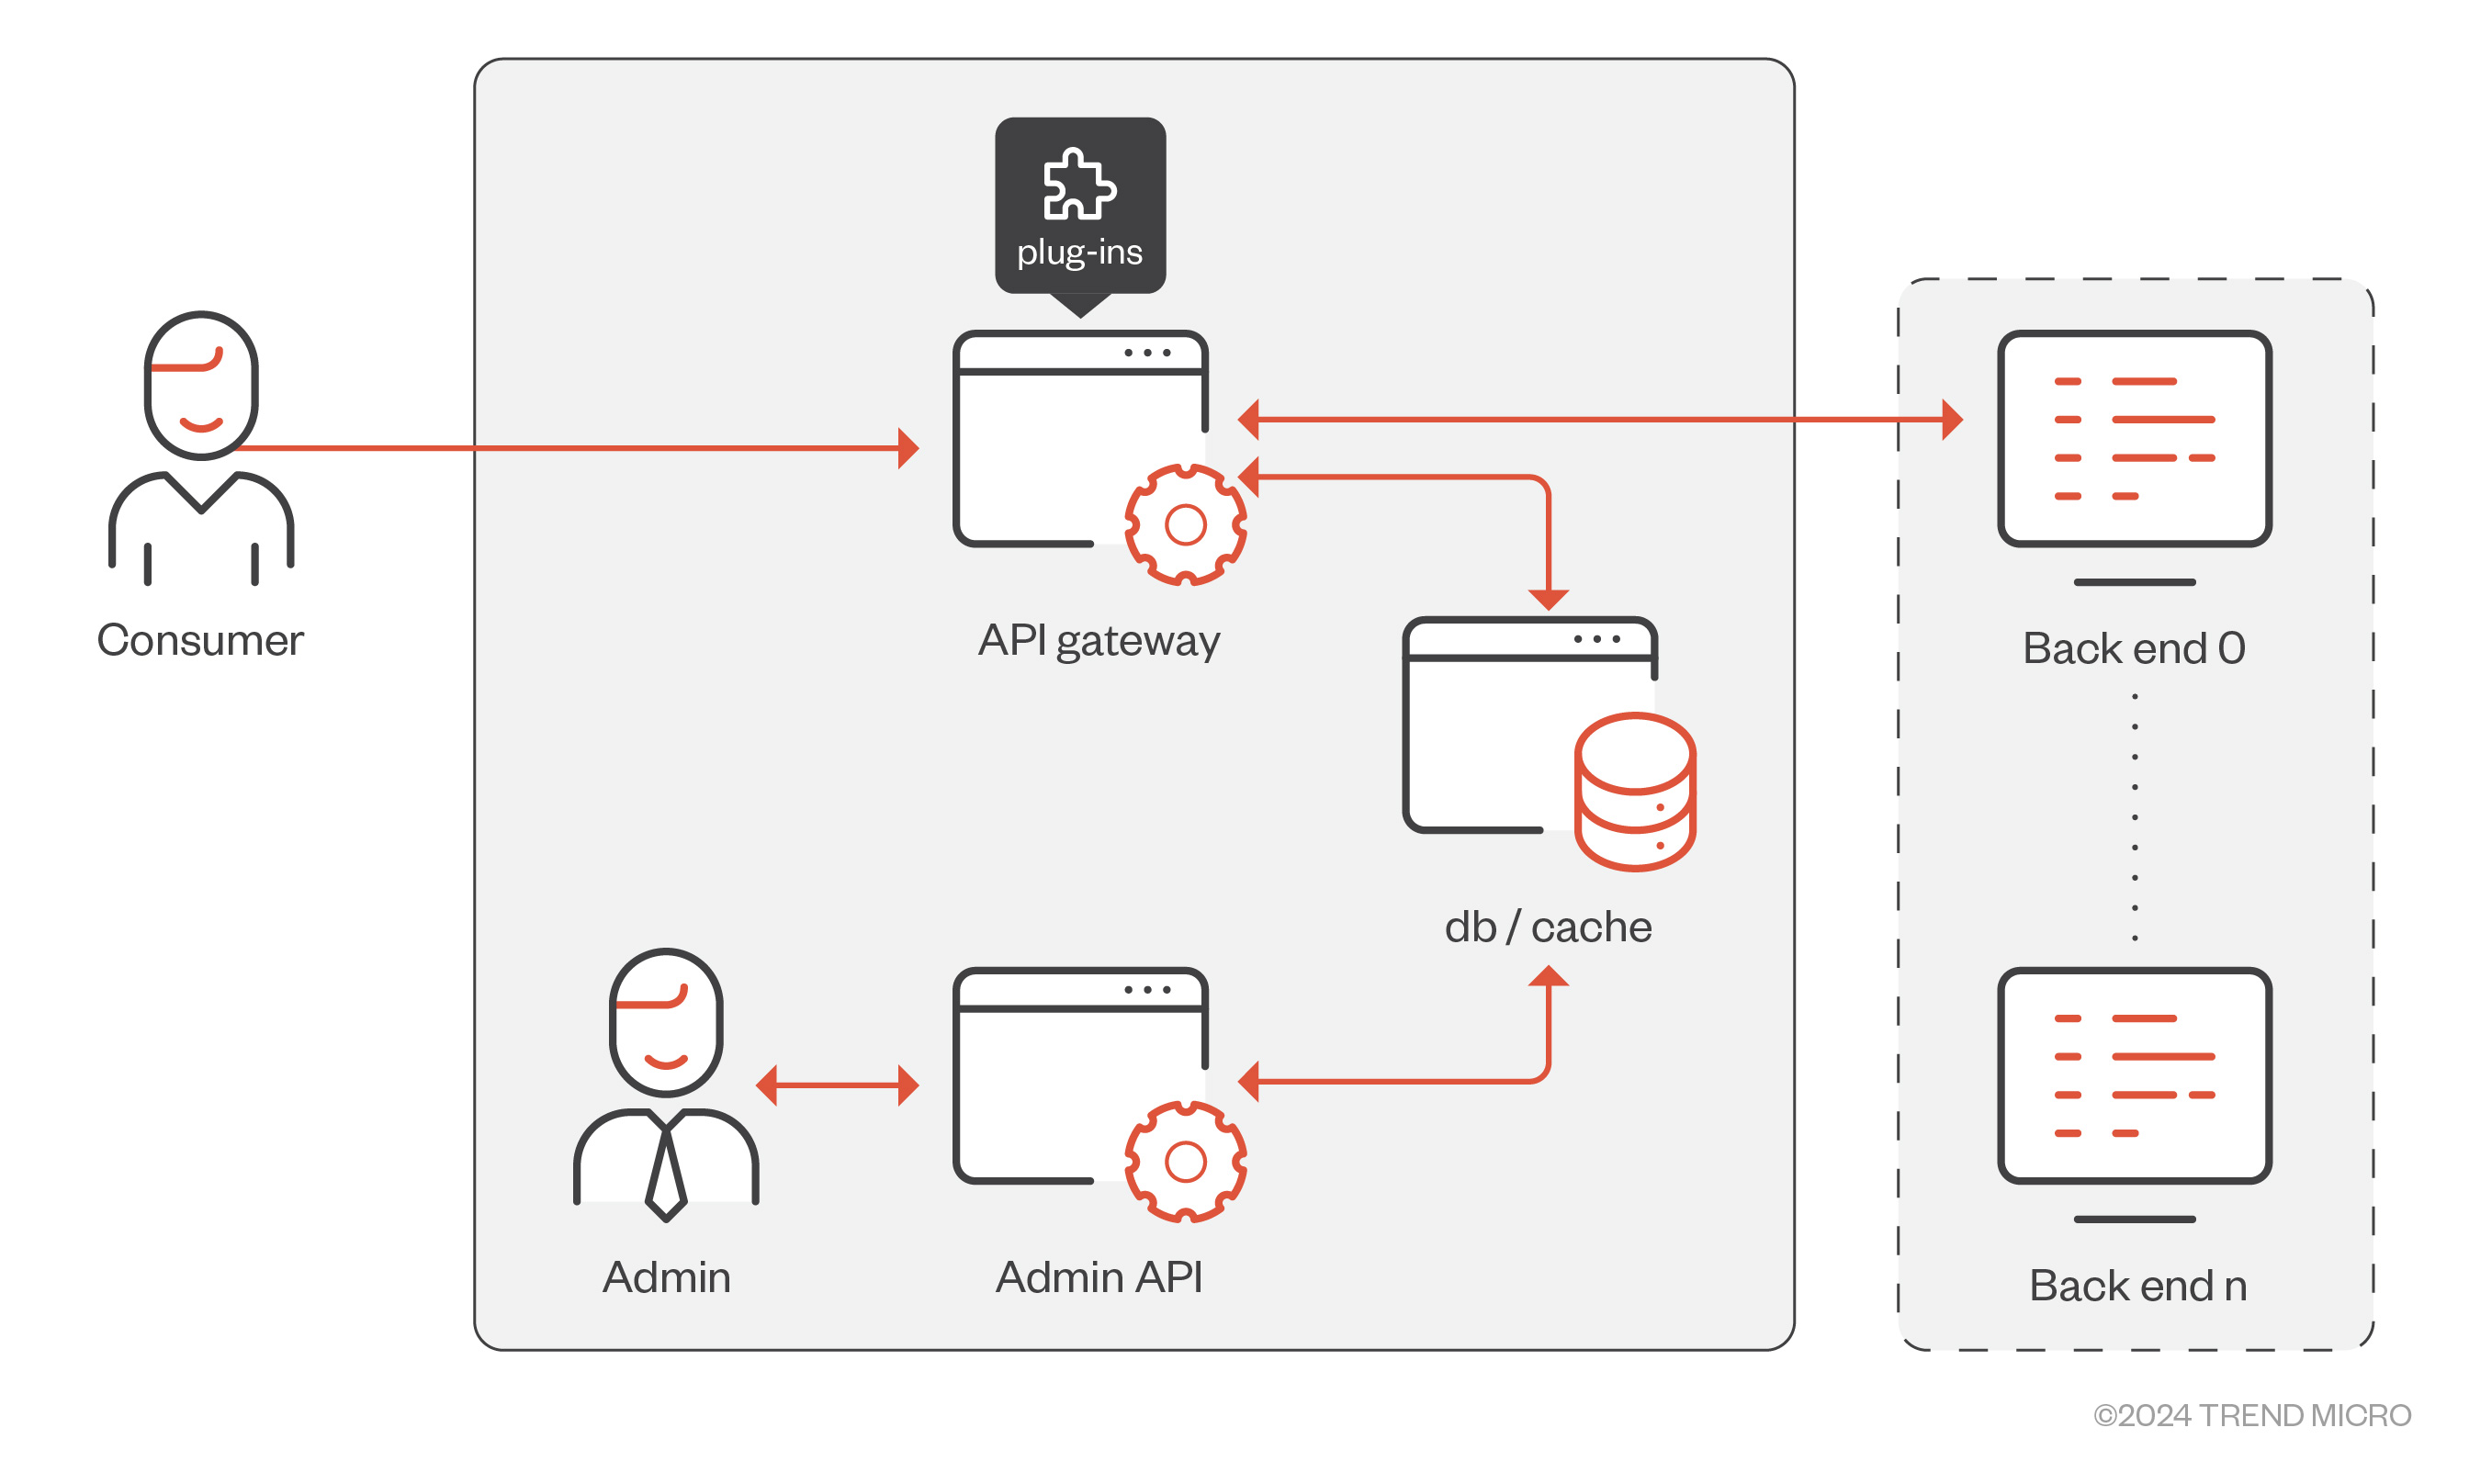 Figure 1. API gateway architecture example